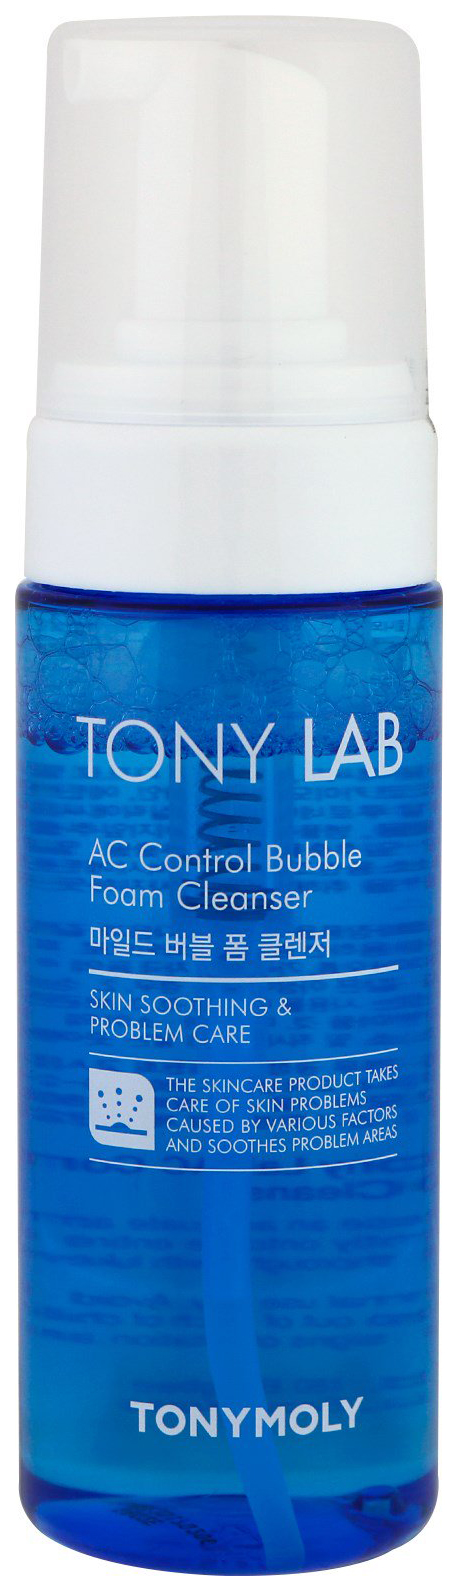 Пенка-мусс для умывания TONY MOLY Tony Lab AC Control для проблемной кожи, 150 мл средство для снятия макияжа tony moly